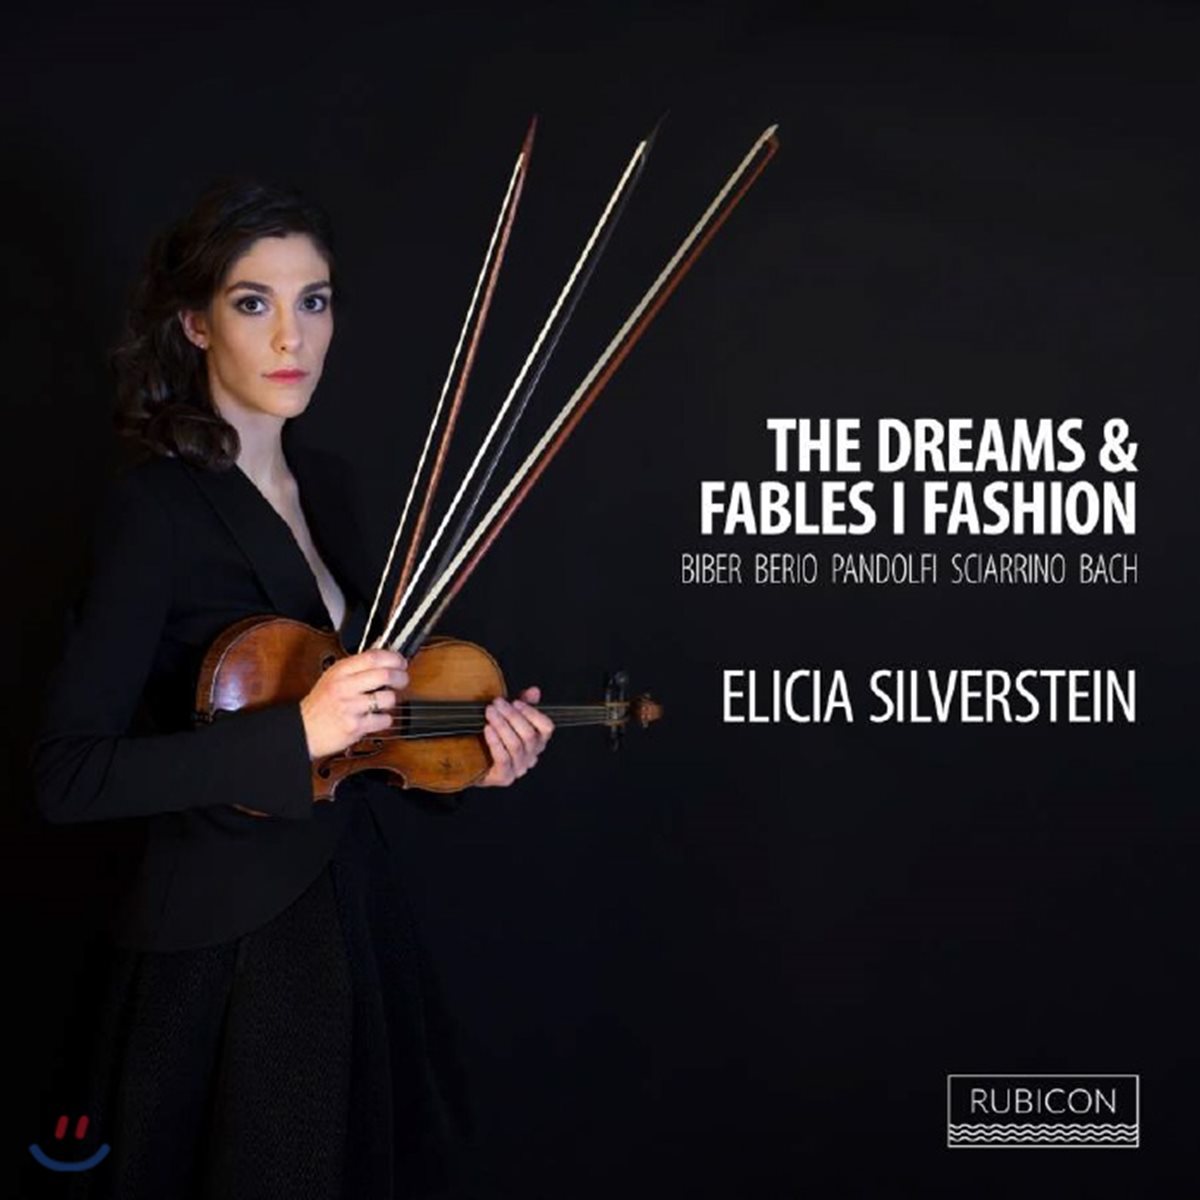 Elicia Silverstein 엘리샤 실버스타인 바이올린 연주집 (The Dreams & Fables I Fashion)